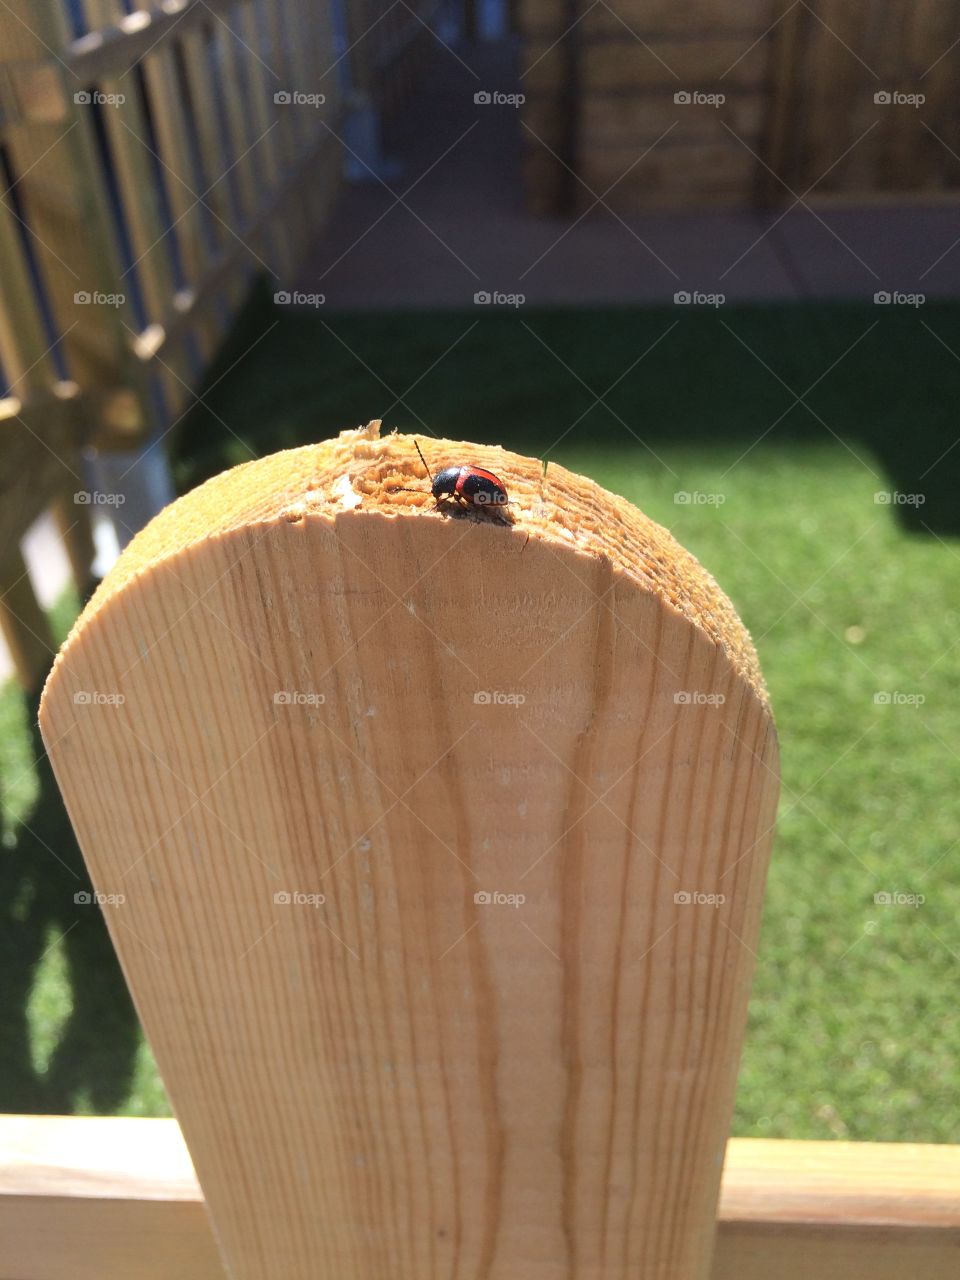 Ladybird on the wood 